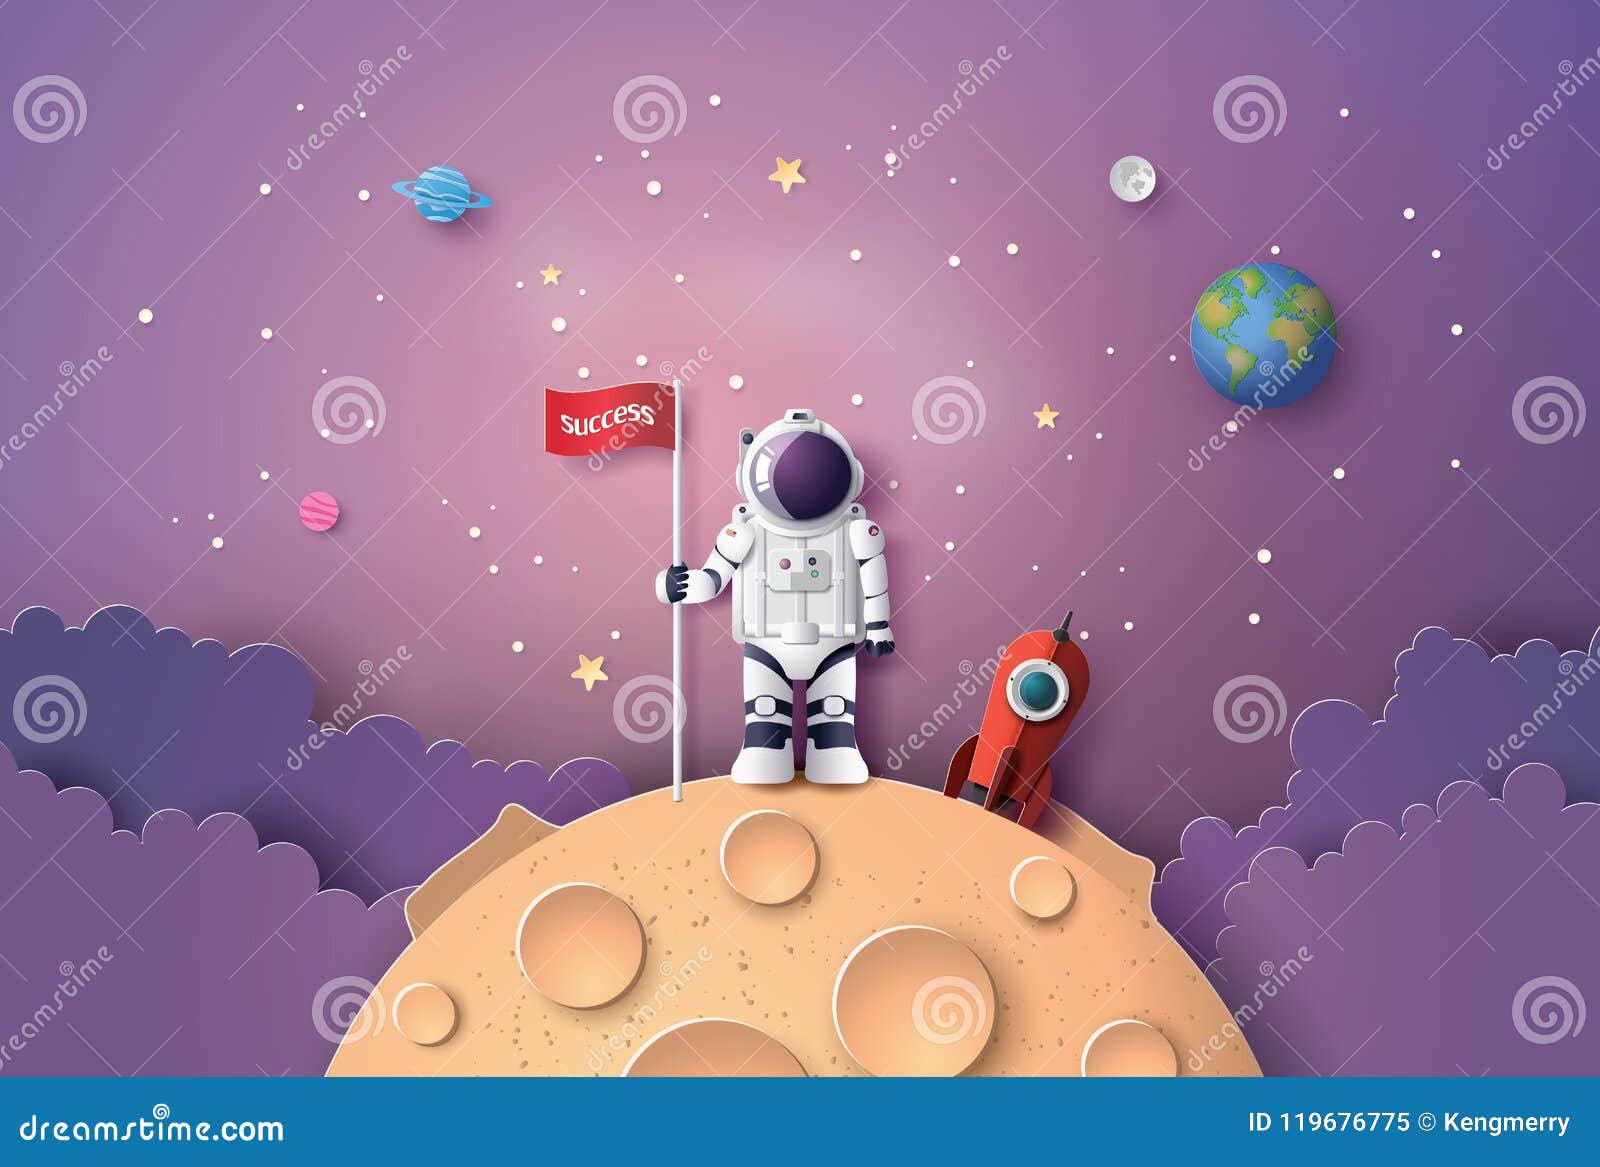 astronaut with flag on the moon